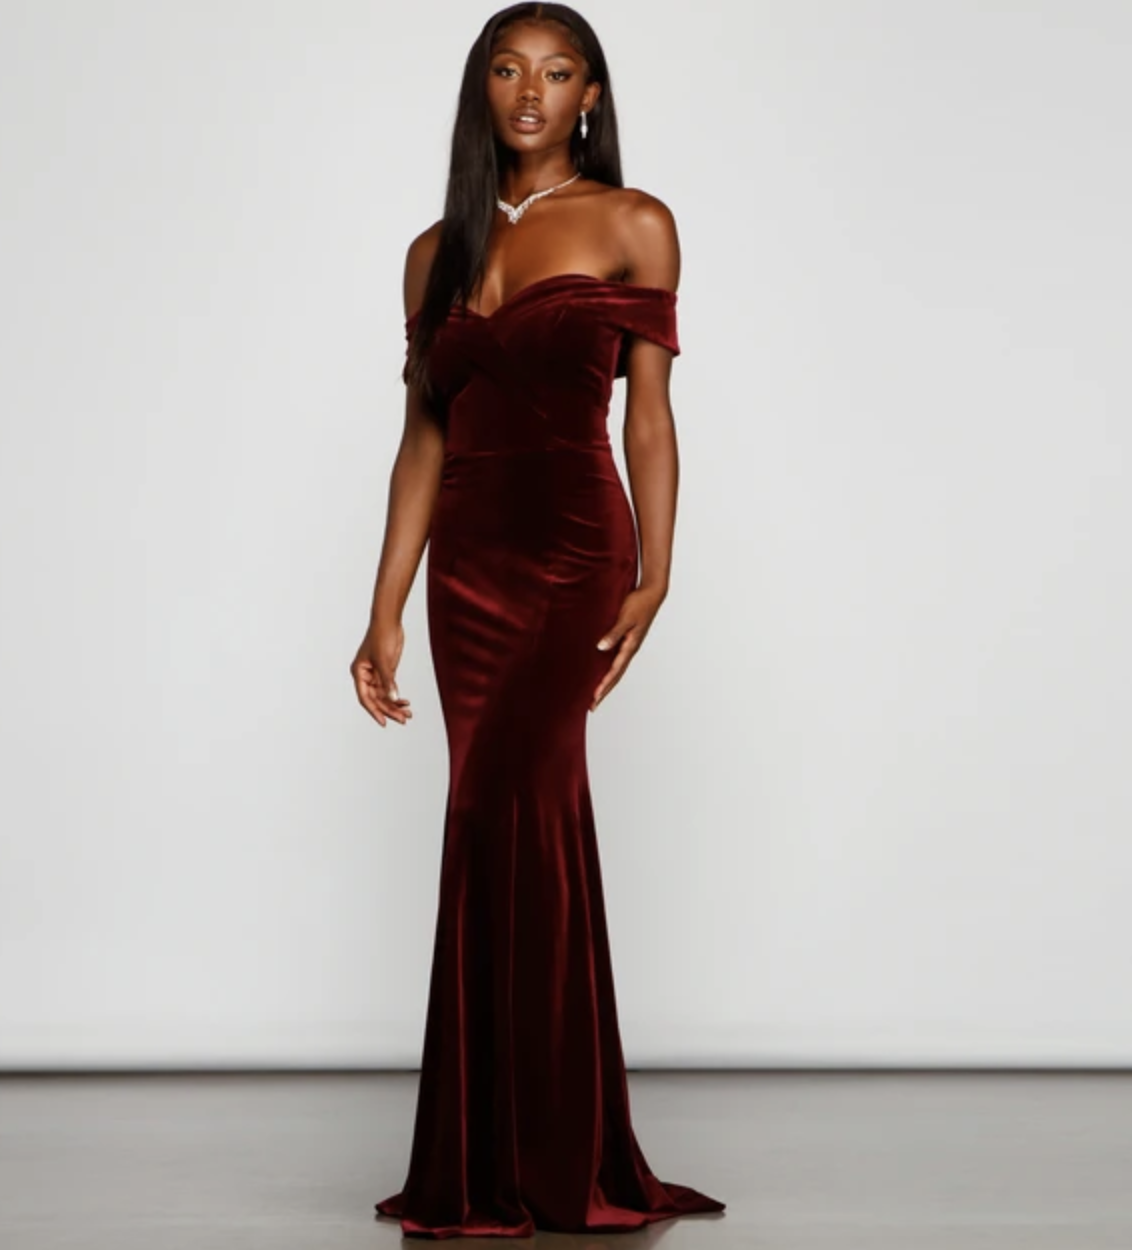 a model in an off the shoulder burgundy velvet gown